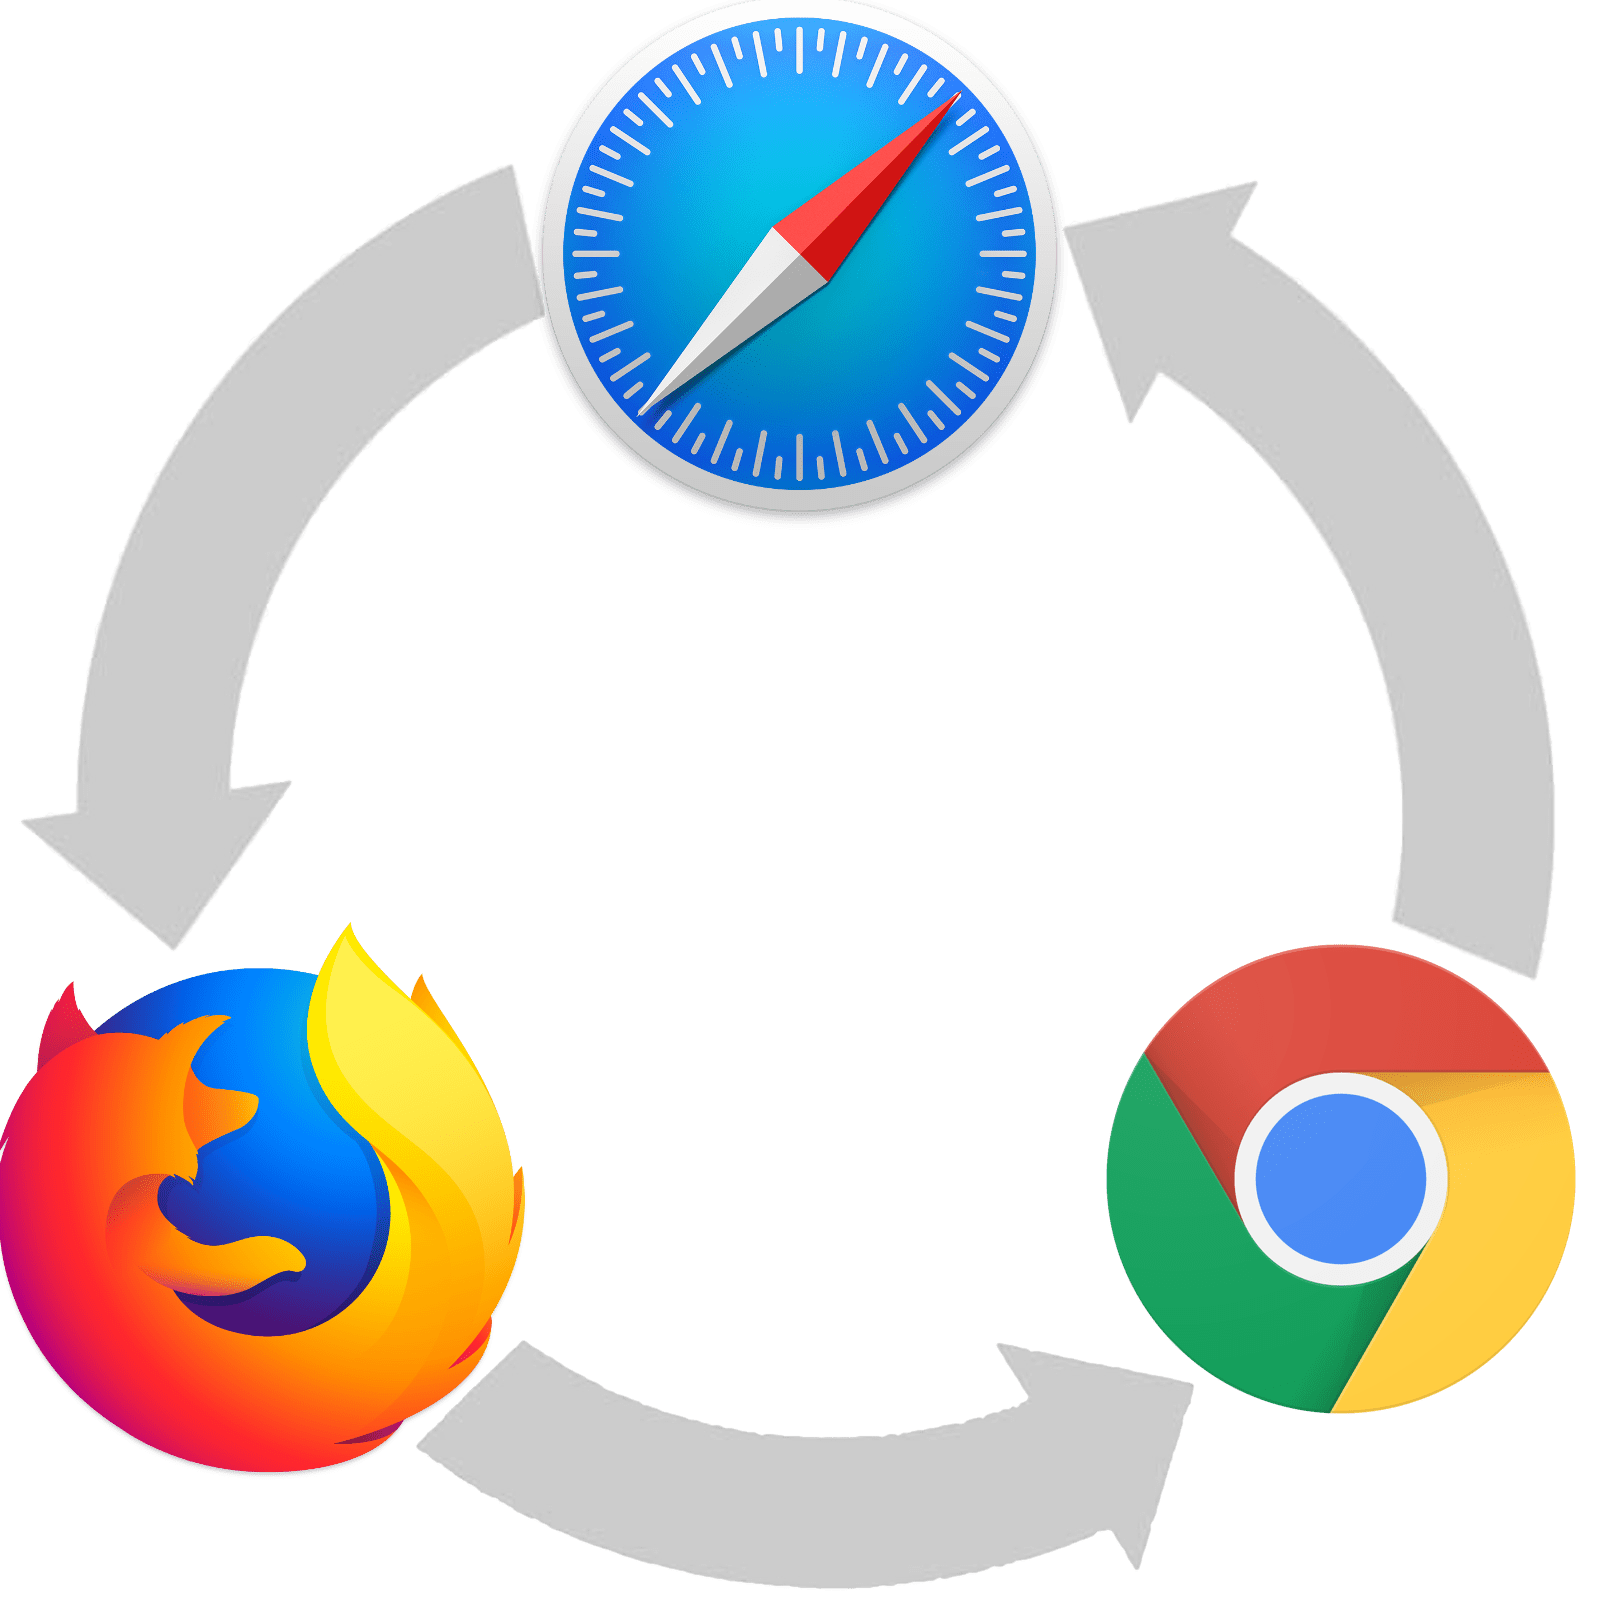 Safari・GoogleChrome・Firefoxの現在ページを他のブラウザで開く方法